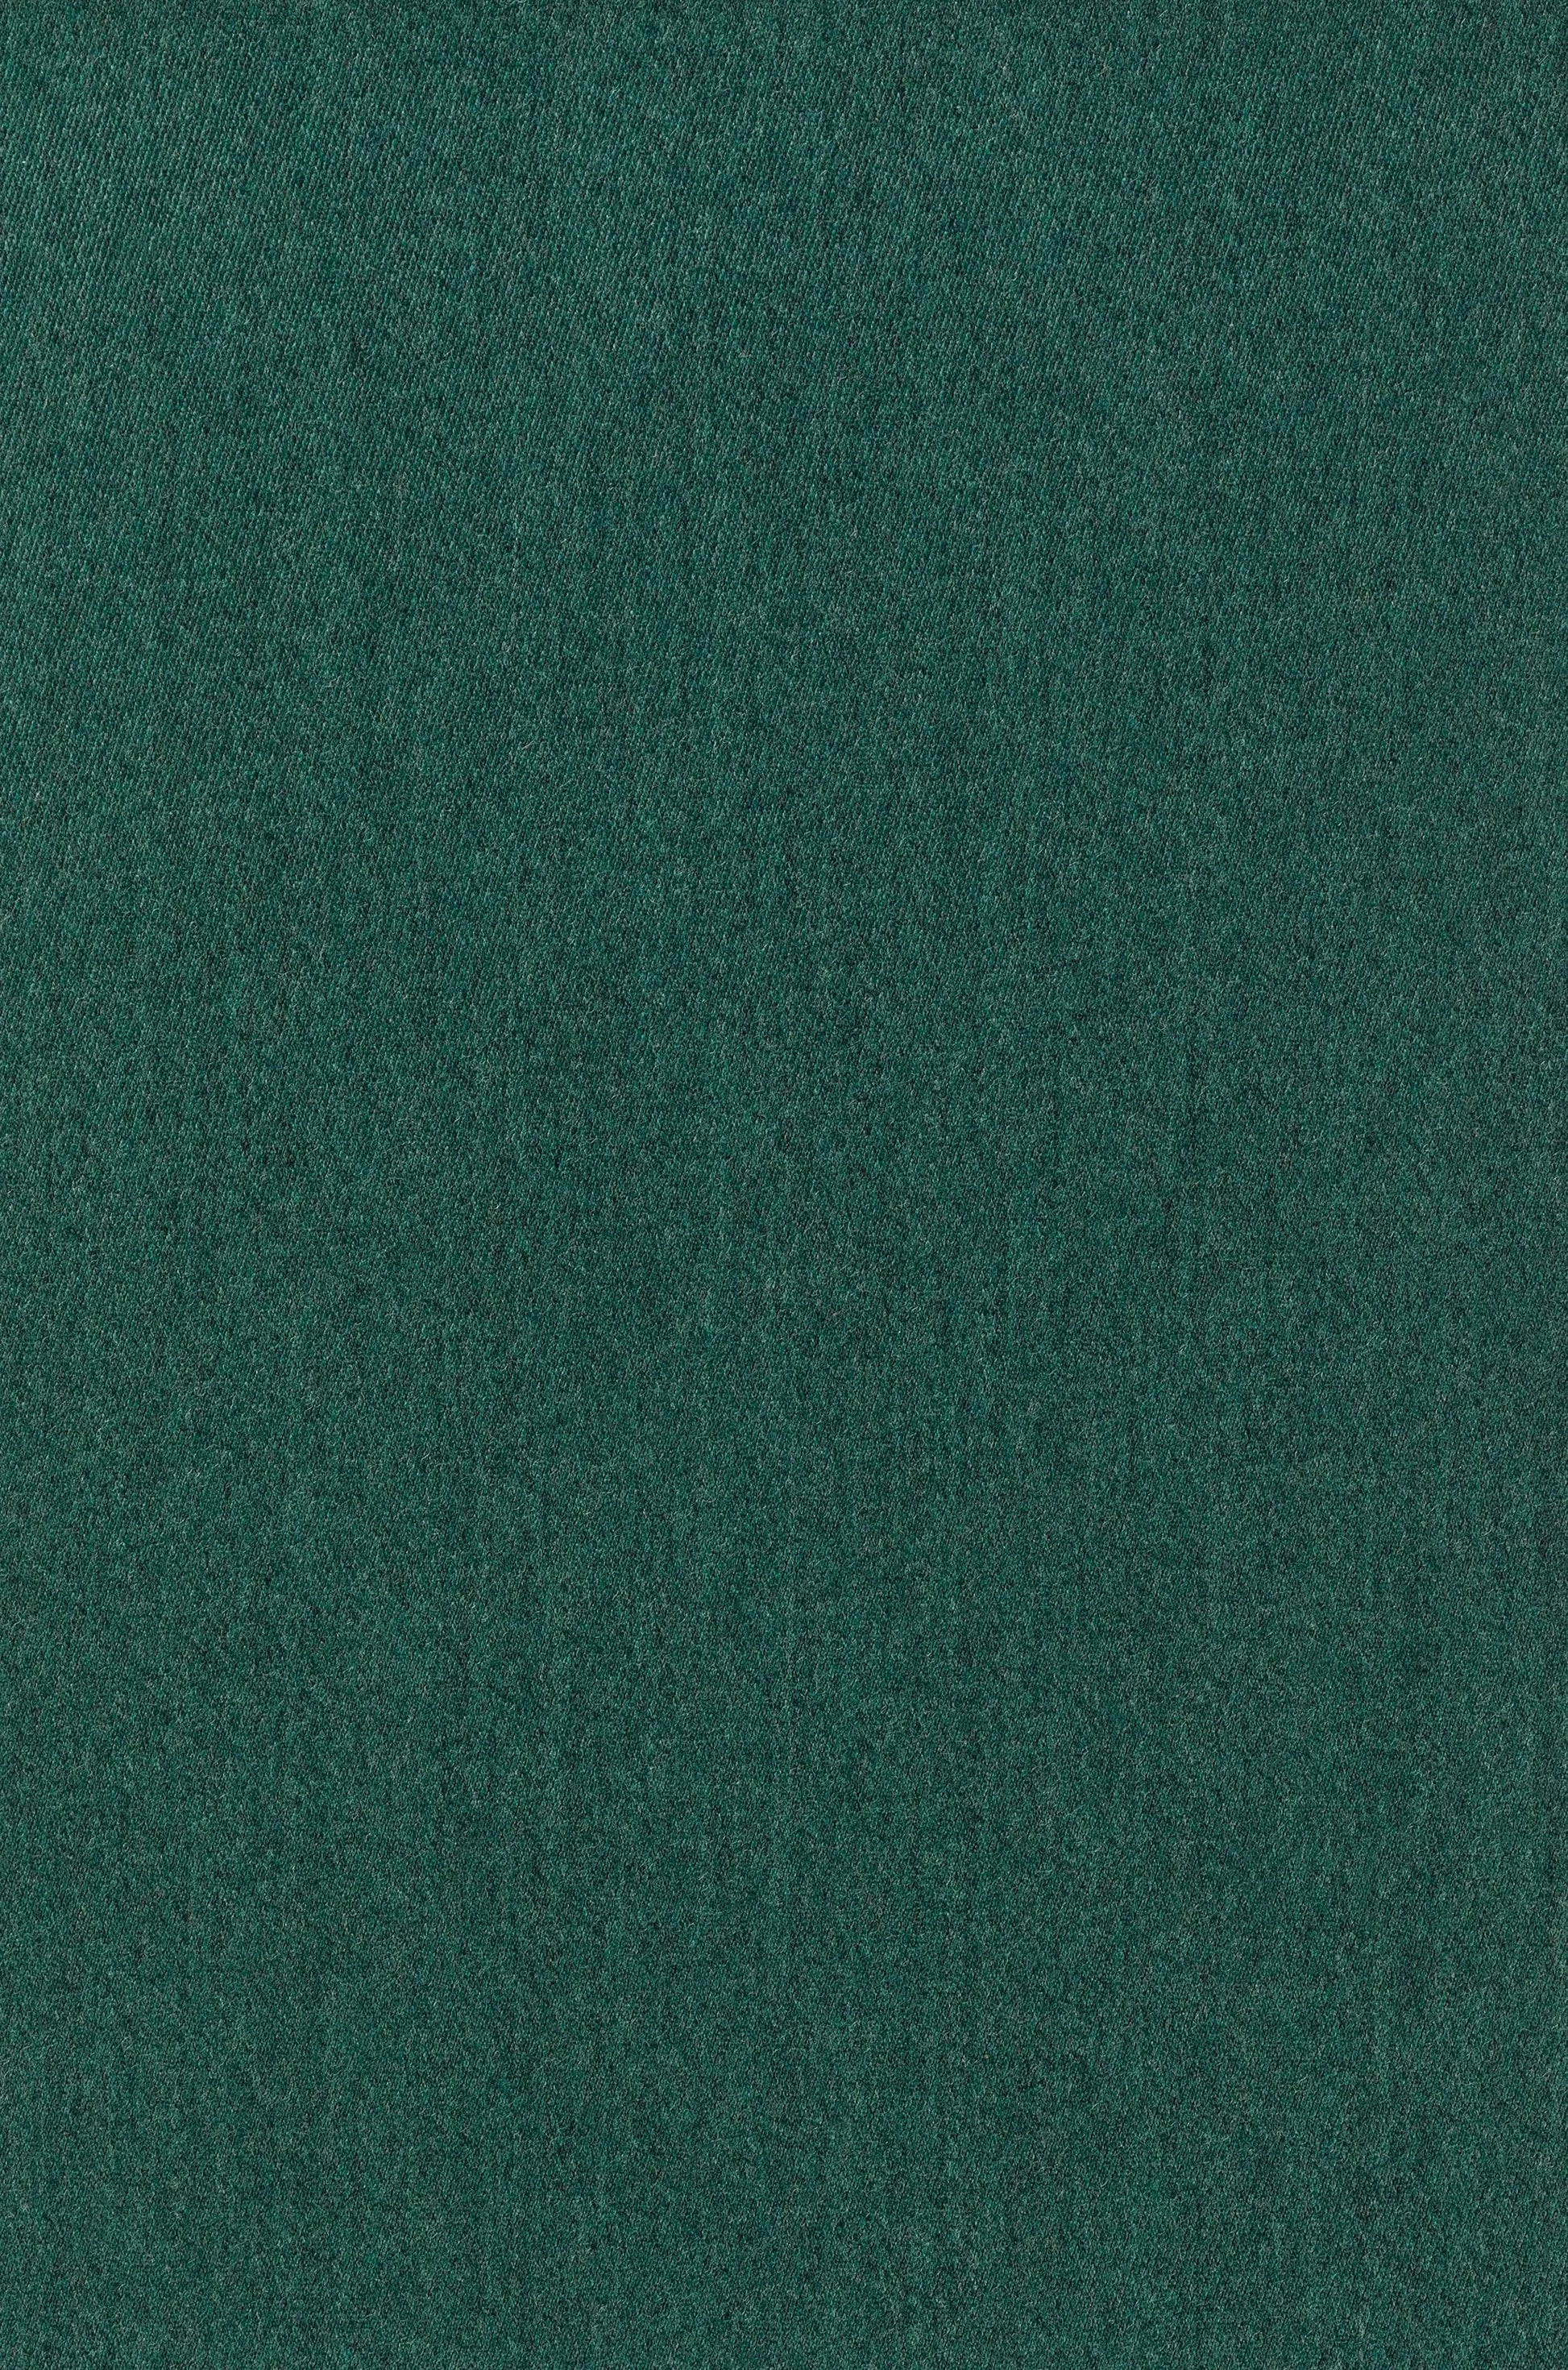 Tivoli Mélange Sateen Merino Wool Fabric in Caspian CD000526 UK321721